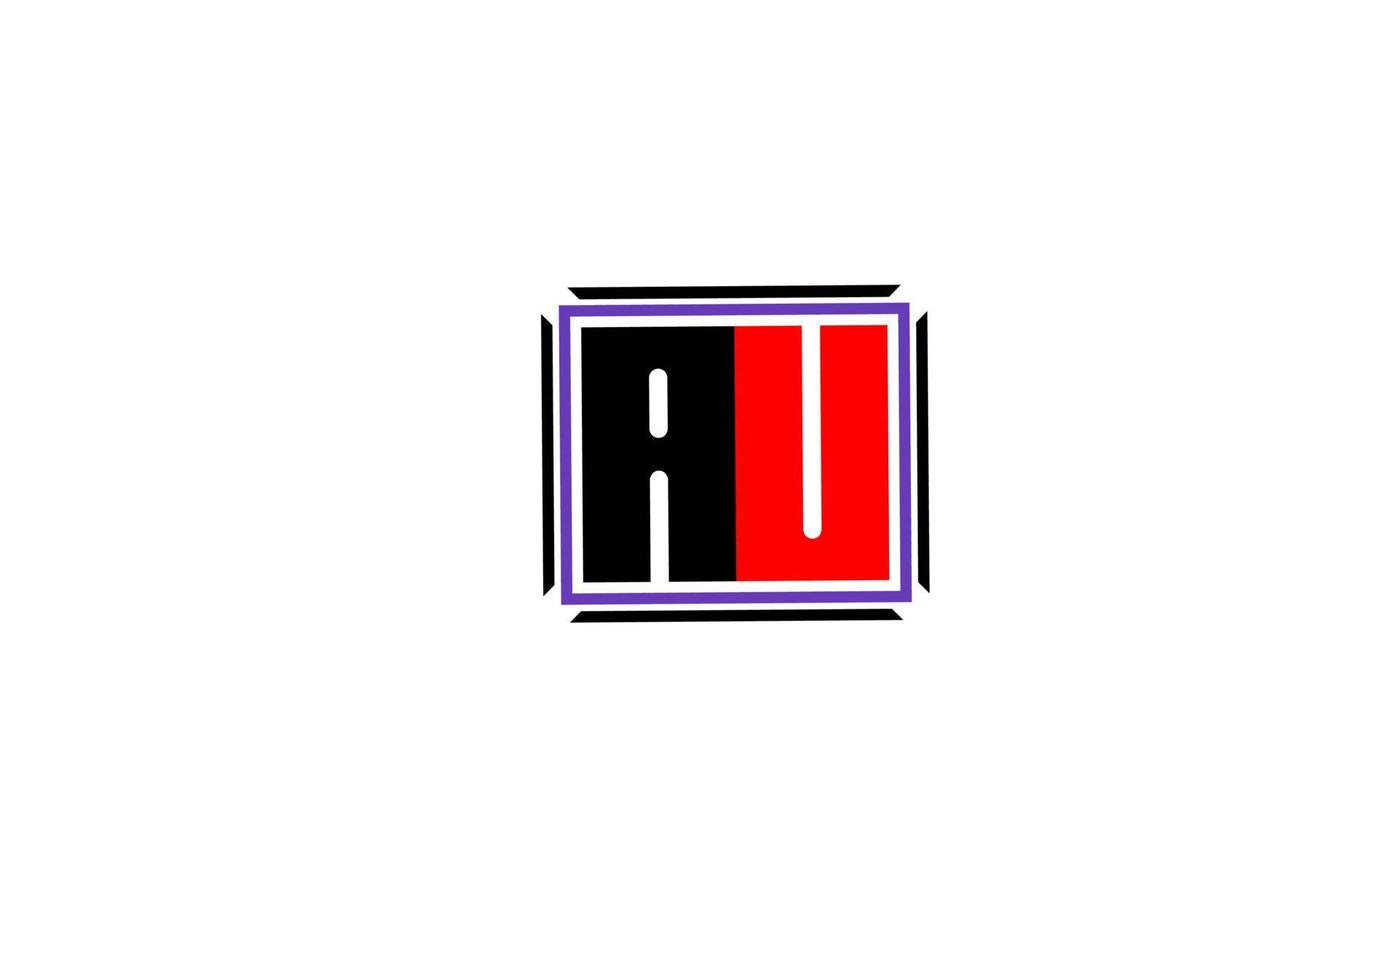 au ua au eerste letter logo vector